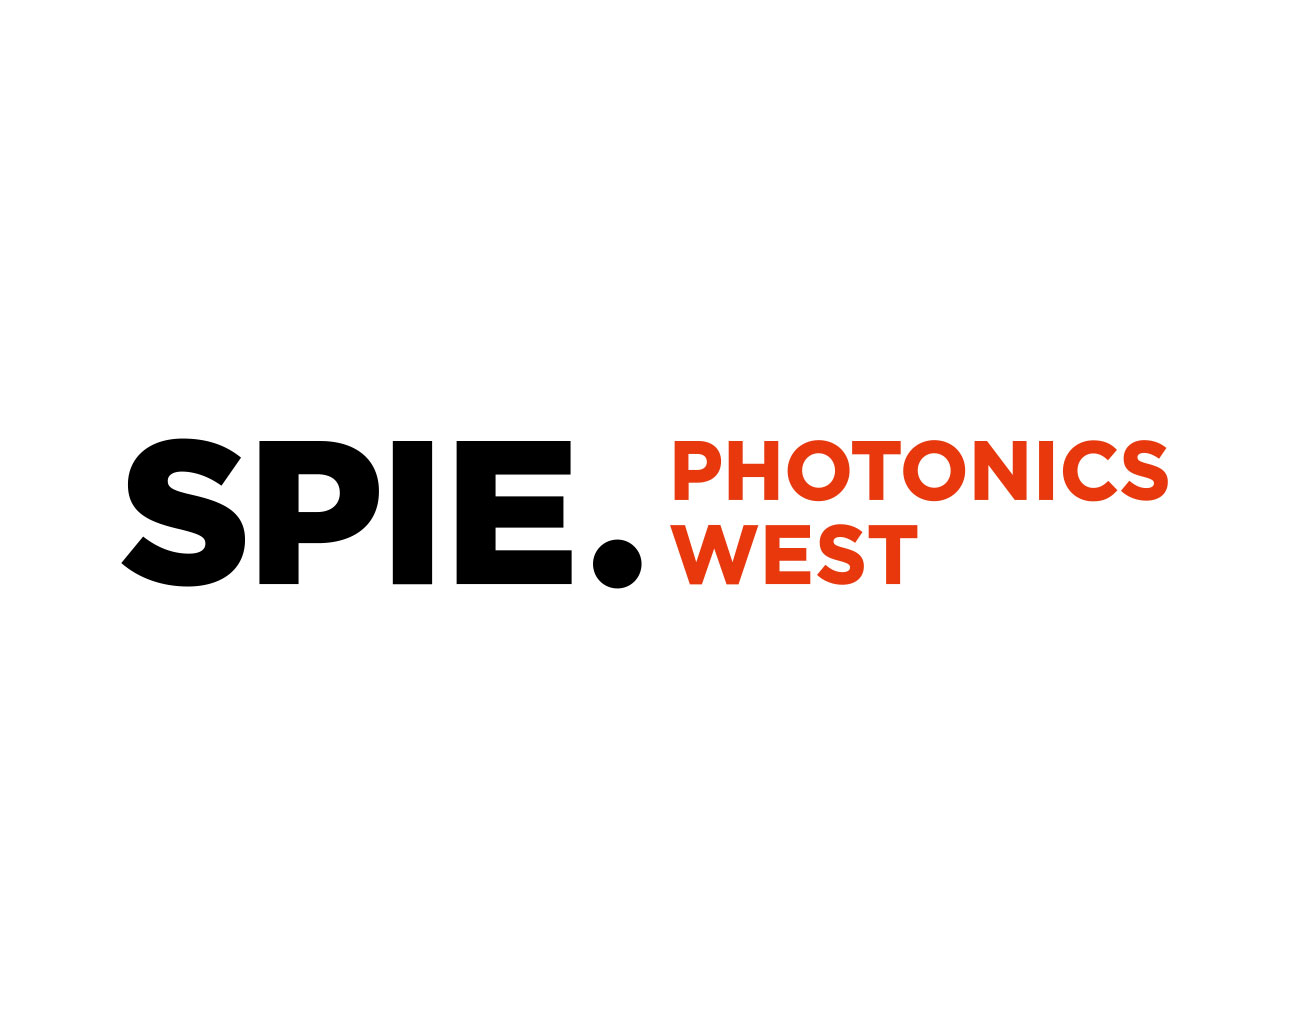 SPIE. Photonics West